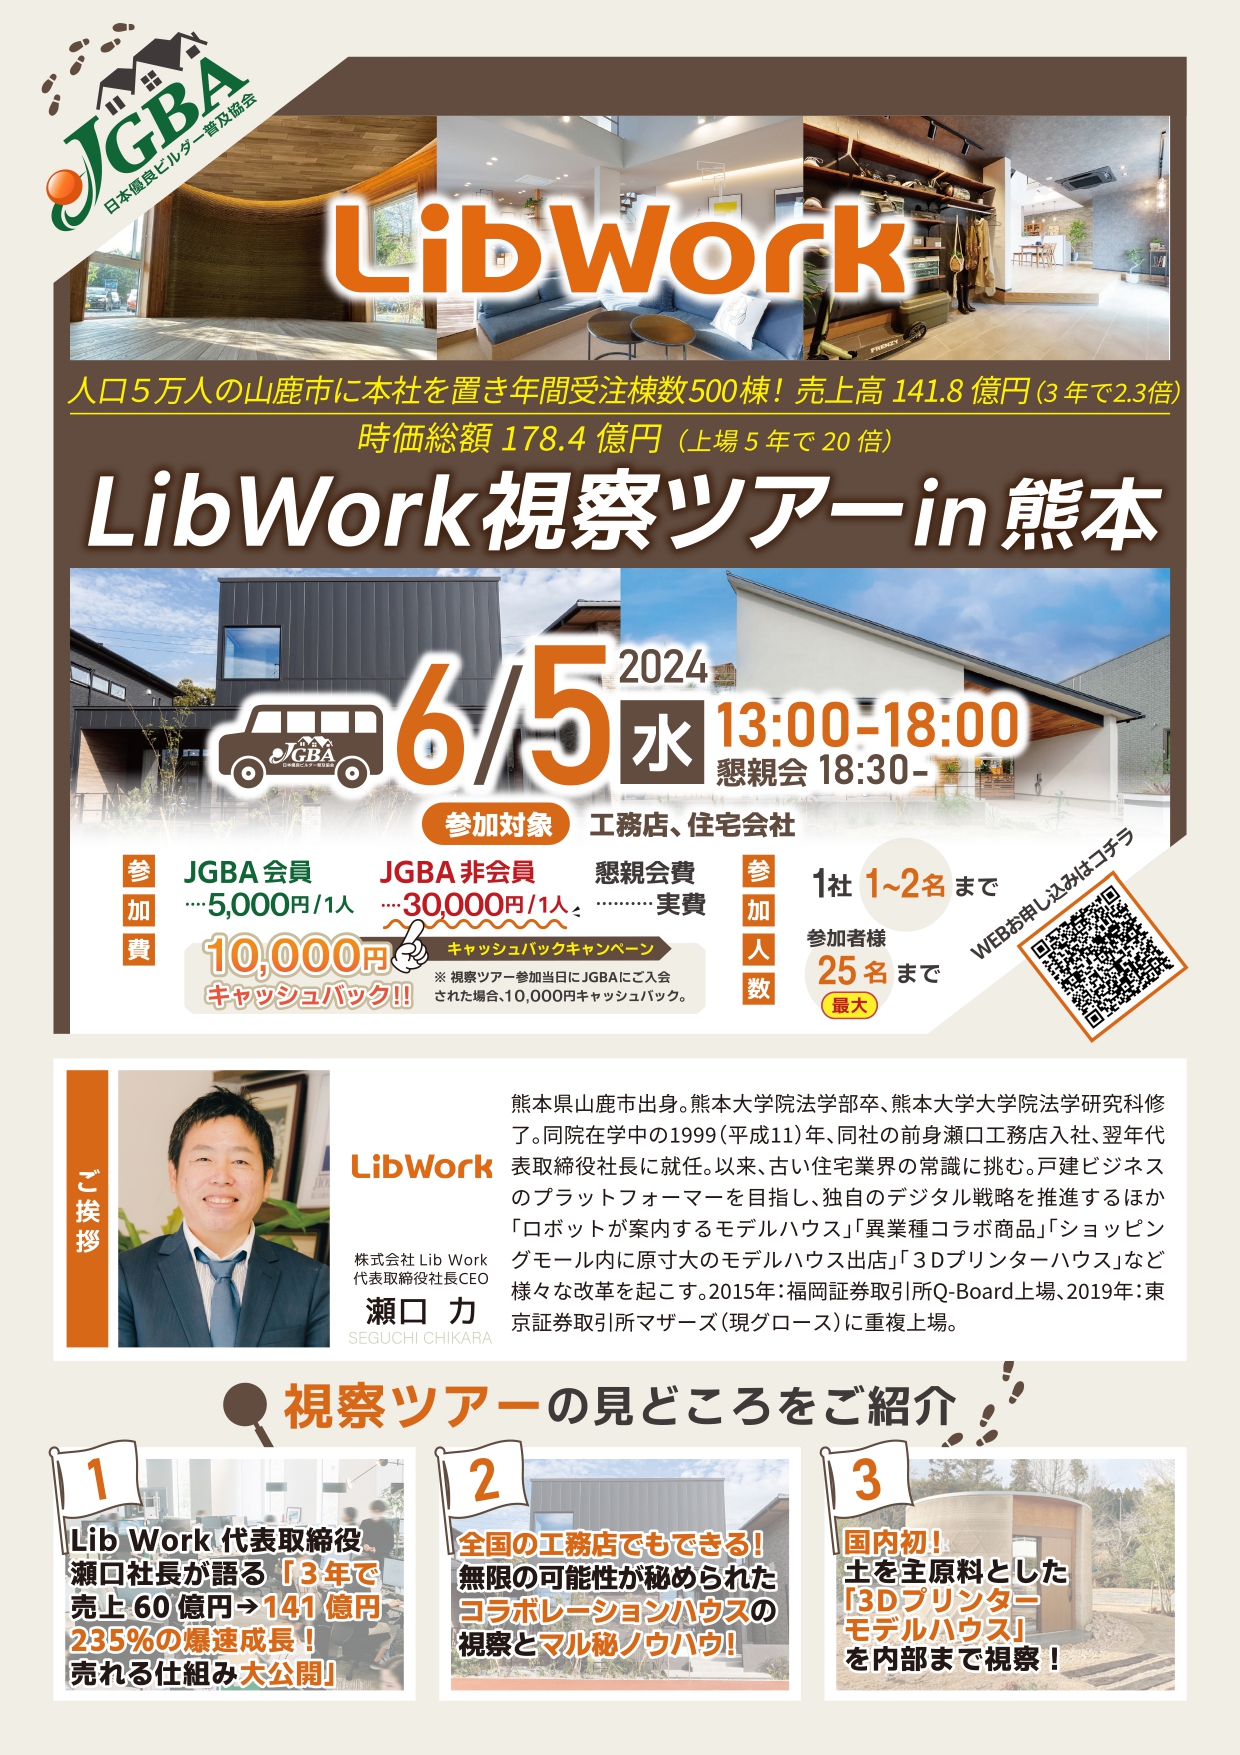 JGBA「LibWork 視察ツアー in熊本」開催決定のサブ画像1